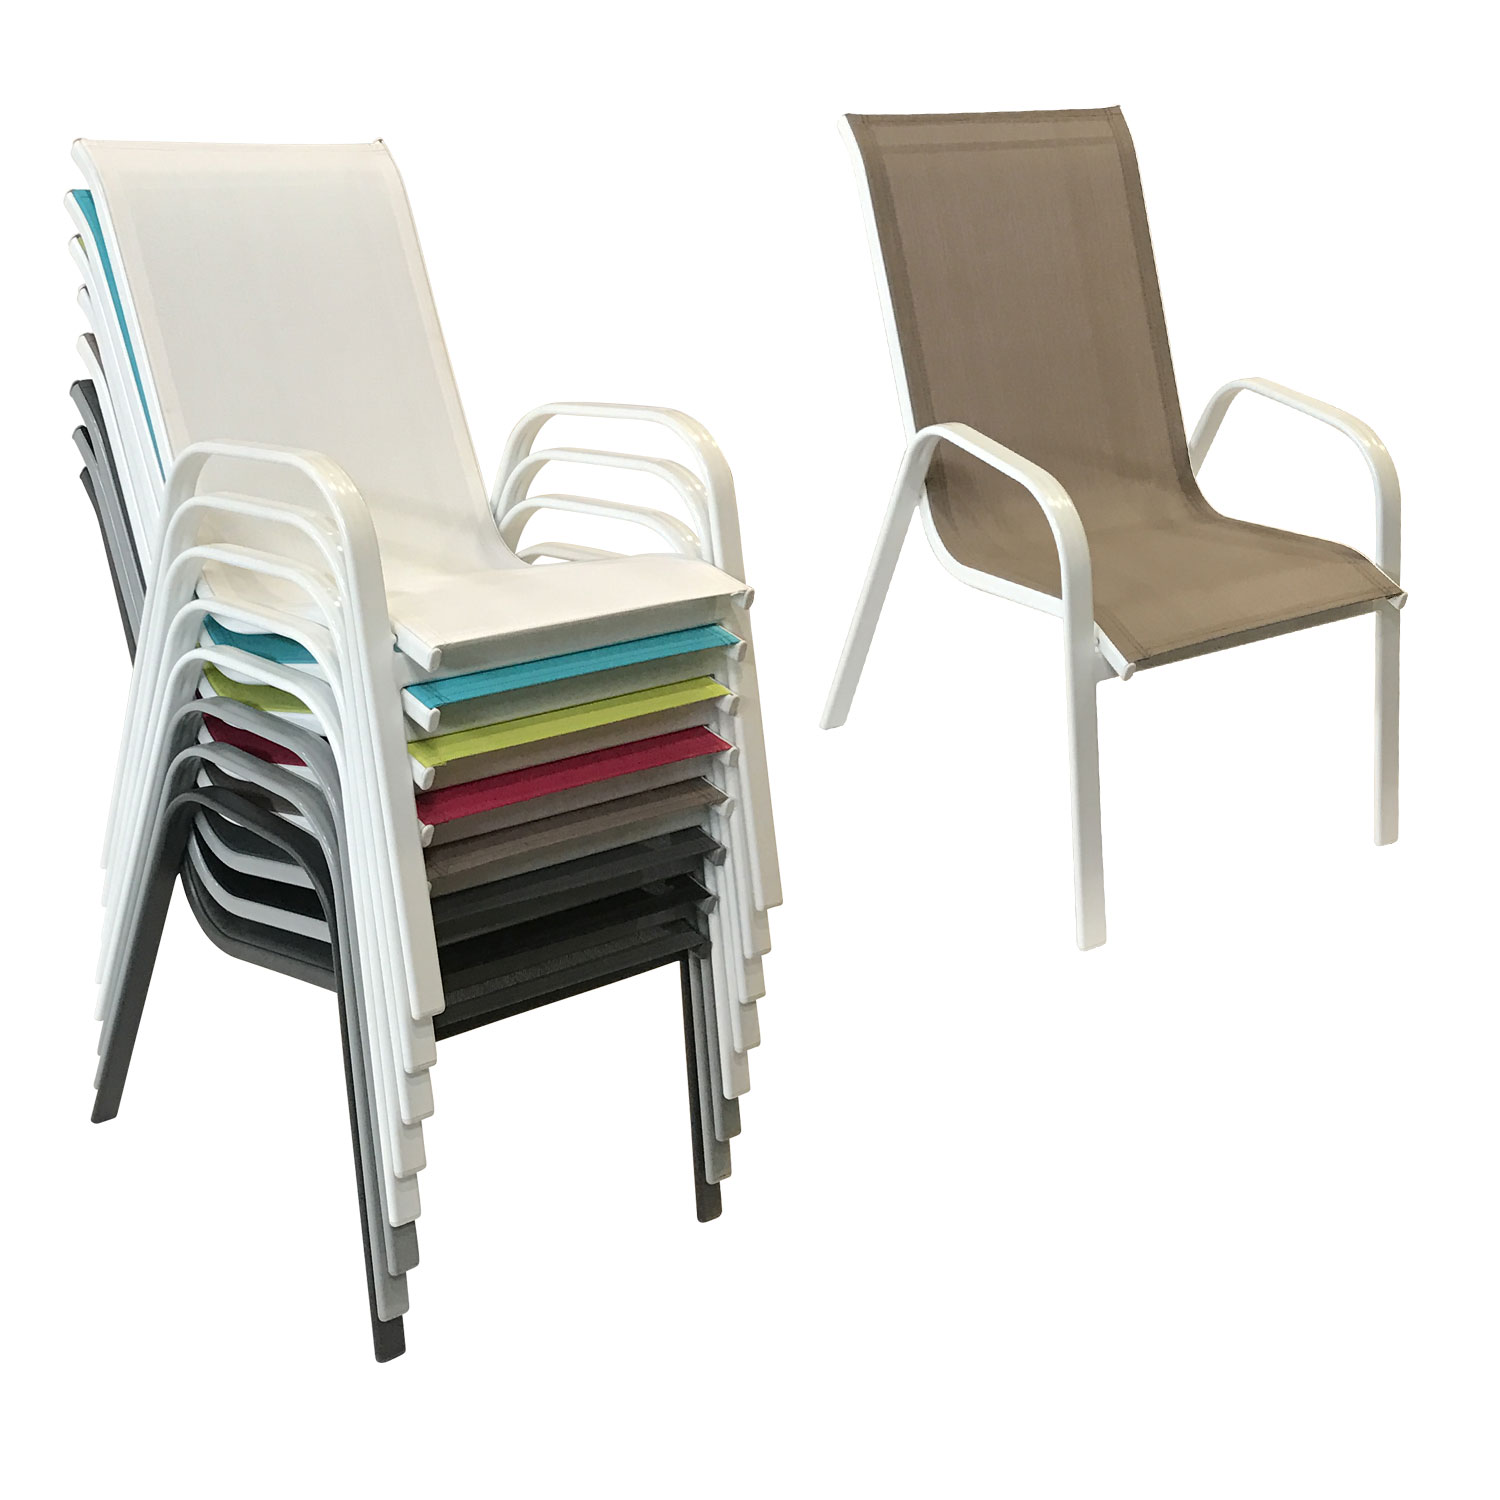 Conjunto de 6 cadeiras MARBELLA em taupe textilene - alumínio branco